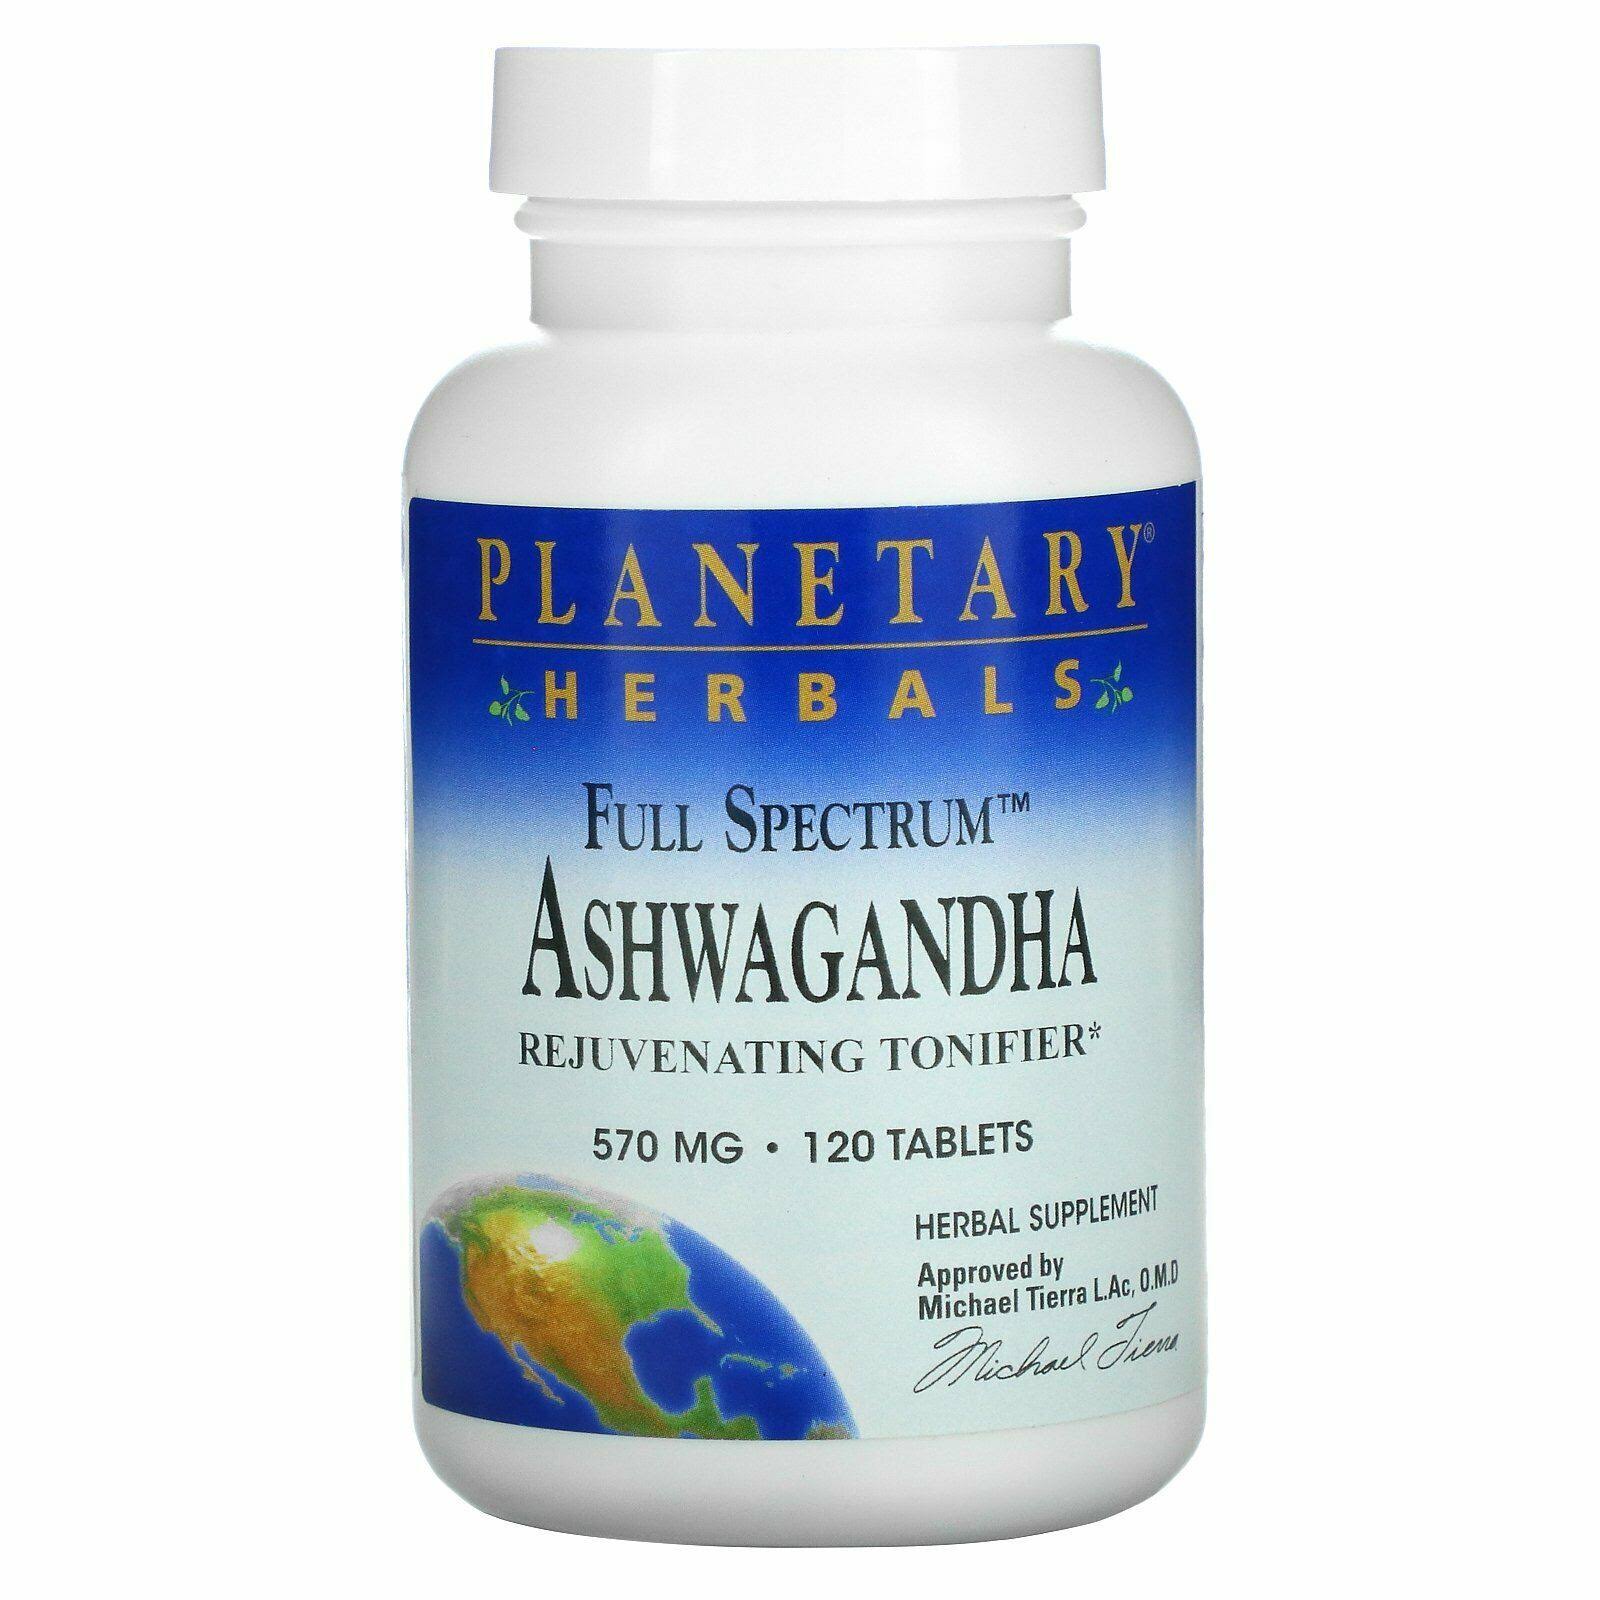 Planetary Herbals Ashwagandha Rejuvenating Tonifier Supplement - 120 Tablets